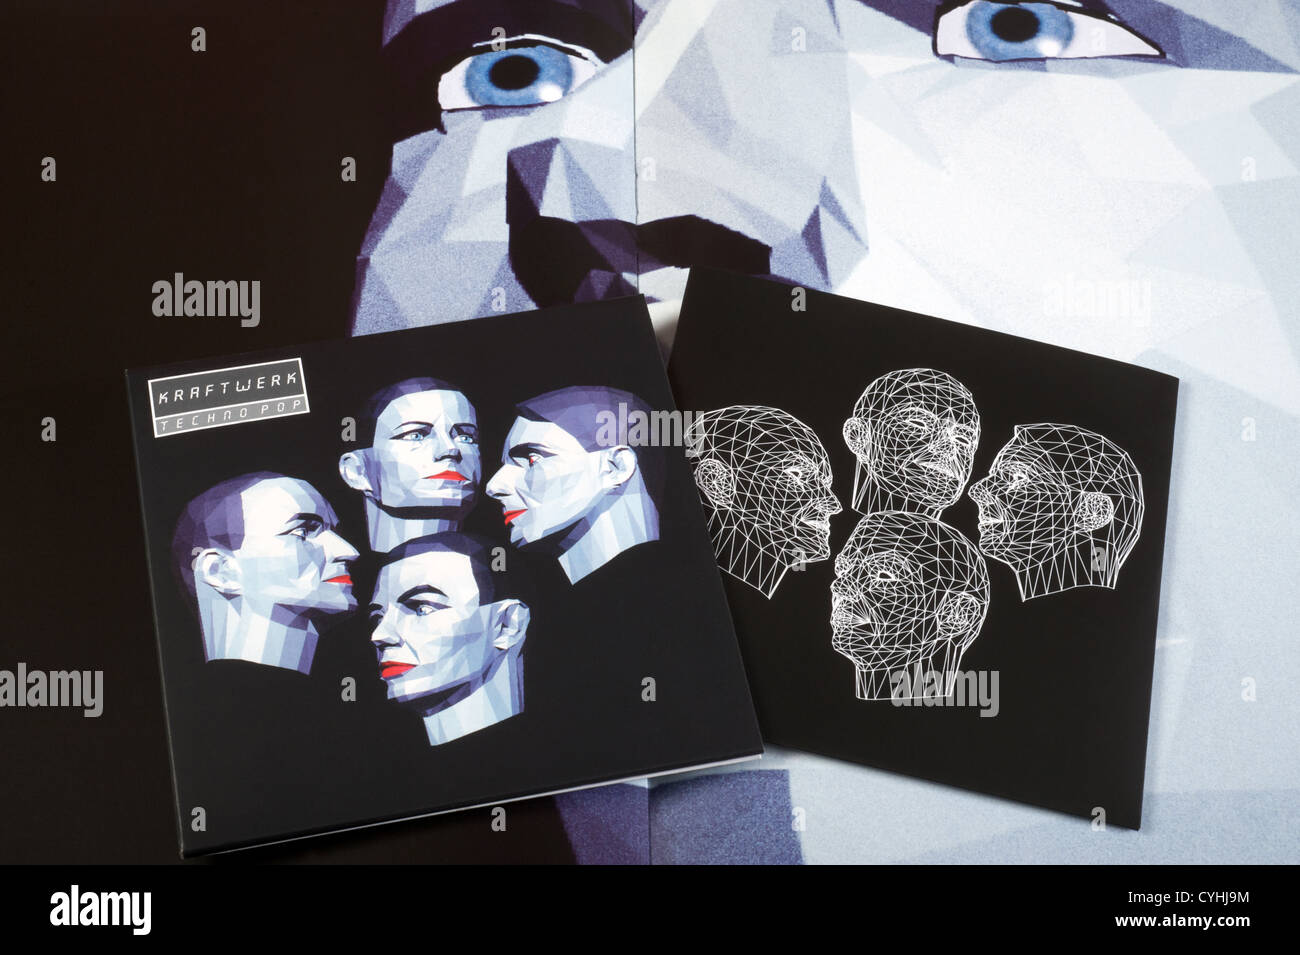 Kraftwerk, Techno Pop CD Stockfotografie - Alamy